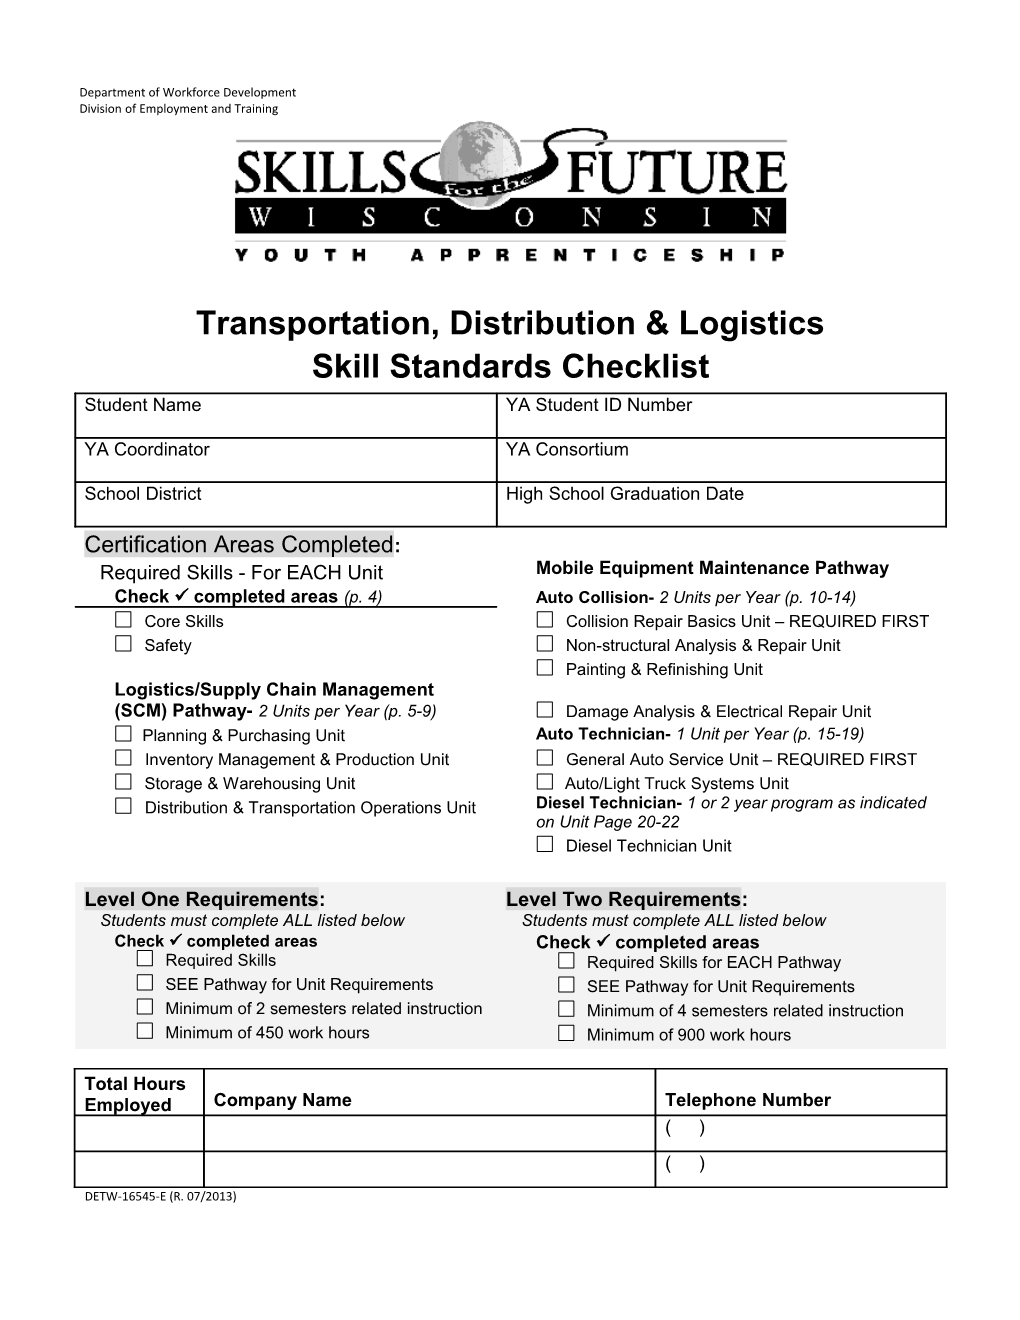 DETW-16545-E, Transportation, Distribution & Logistics Skill Standards Checklist